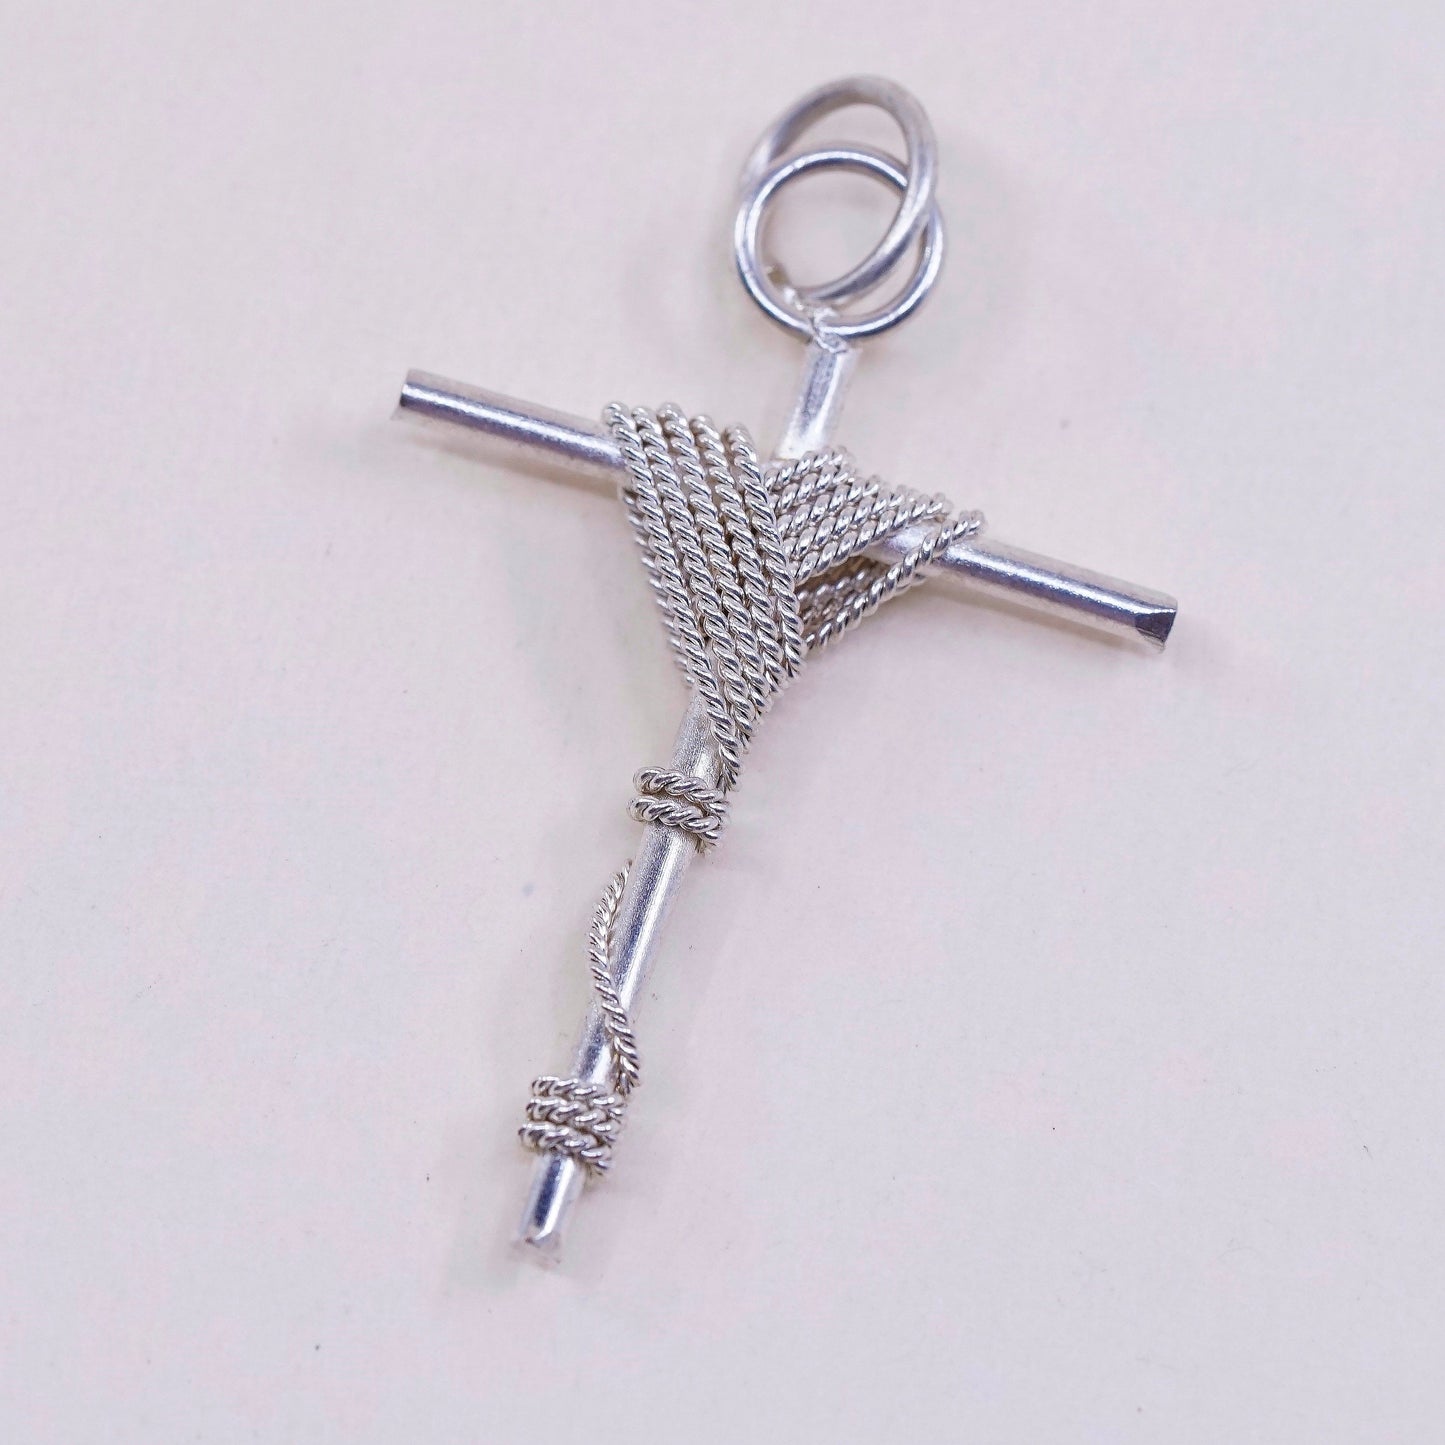 Vintage handmade Sterling silver filigree pendant, 925 cross, stamped 925